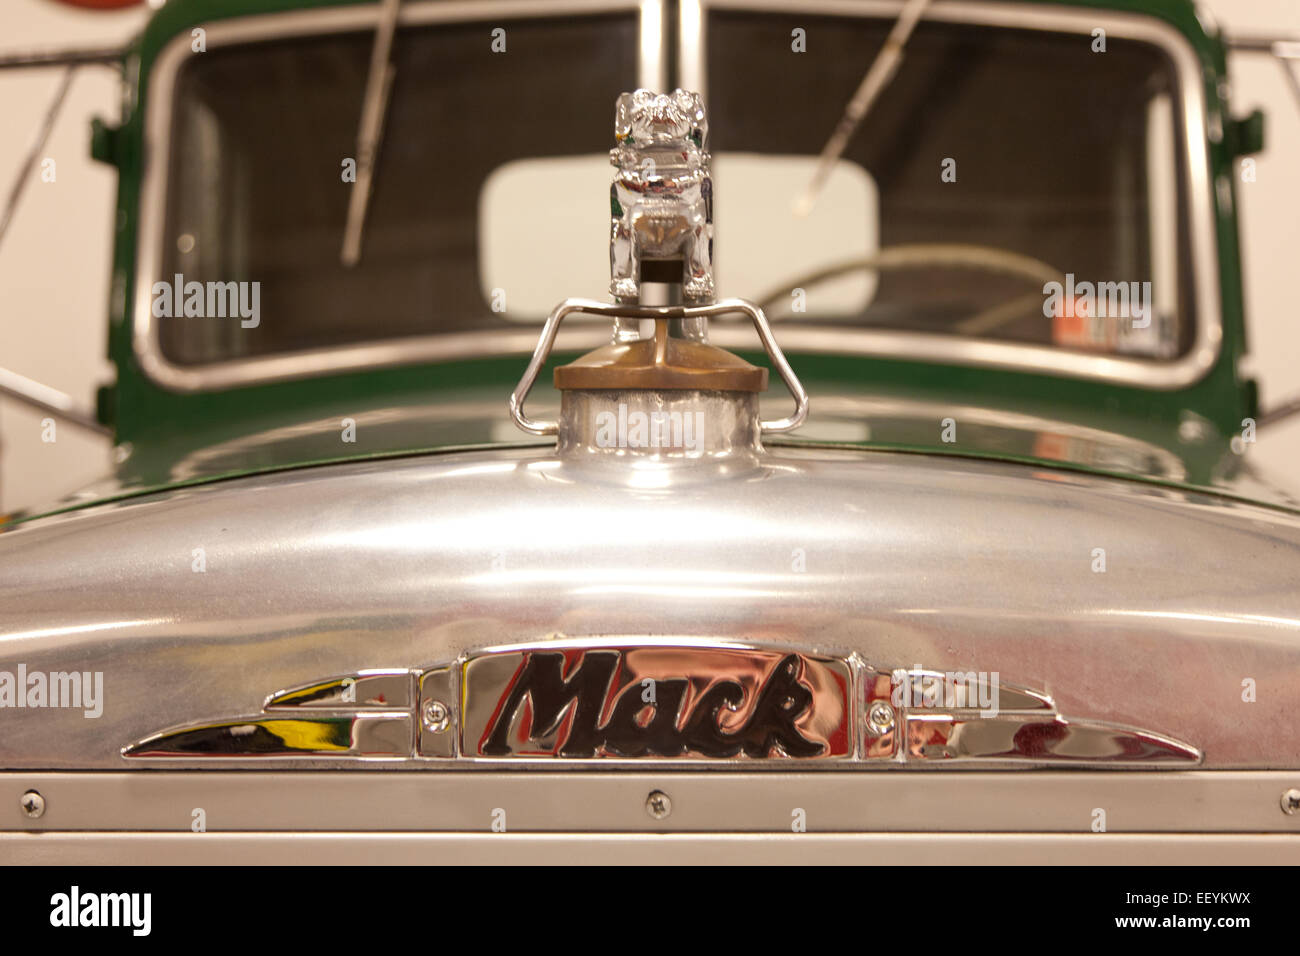 Closeup of the Mack emblem on the hood of an antique Mack truck Stock Photo